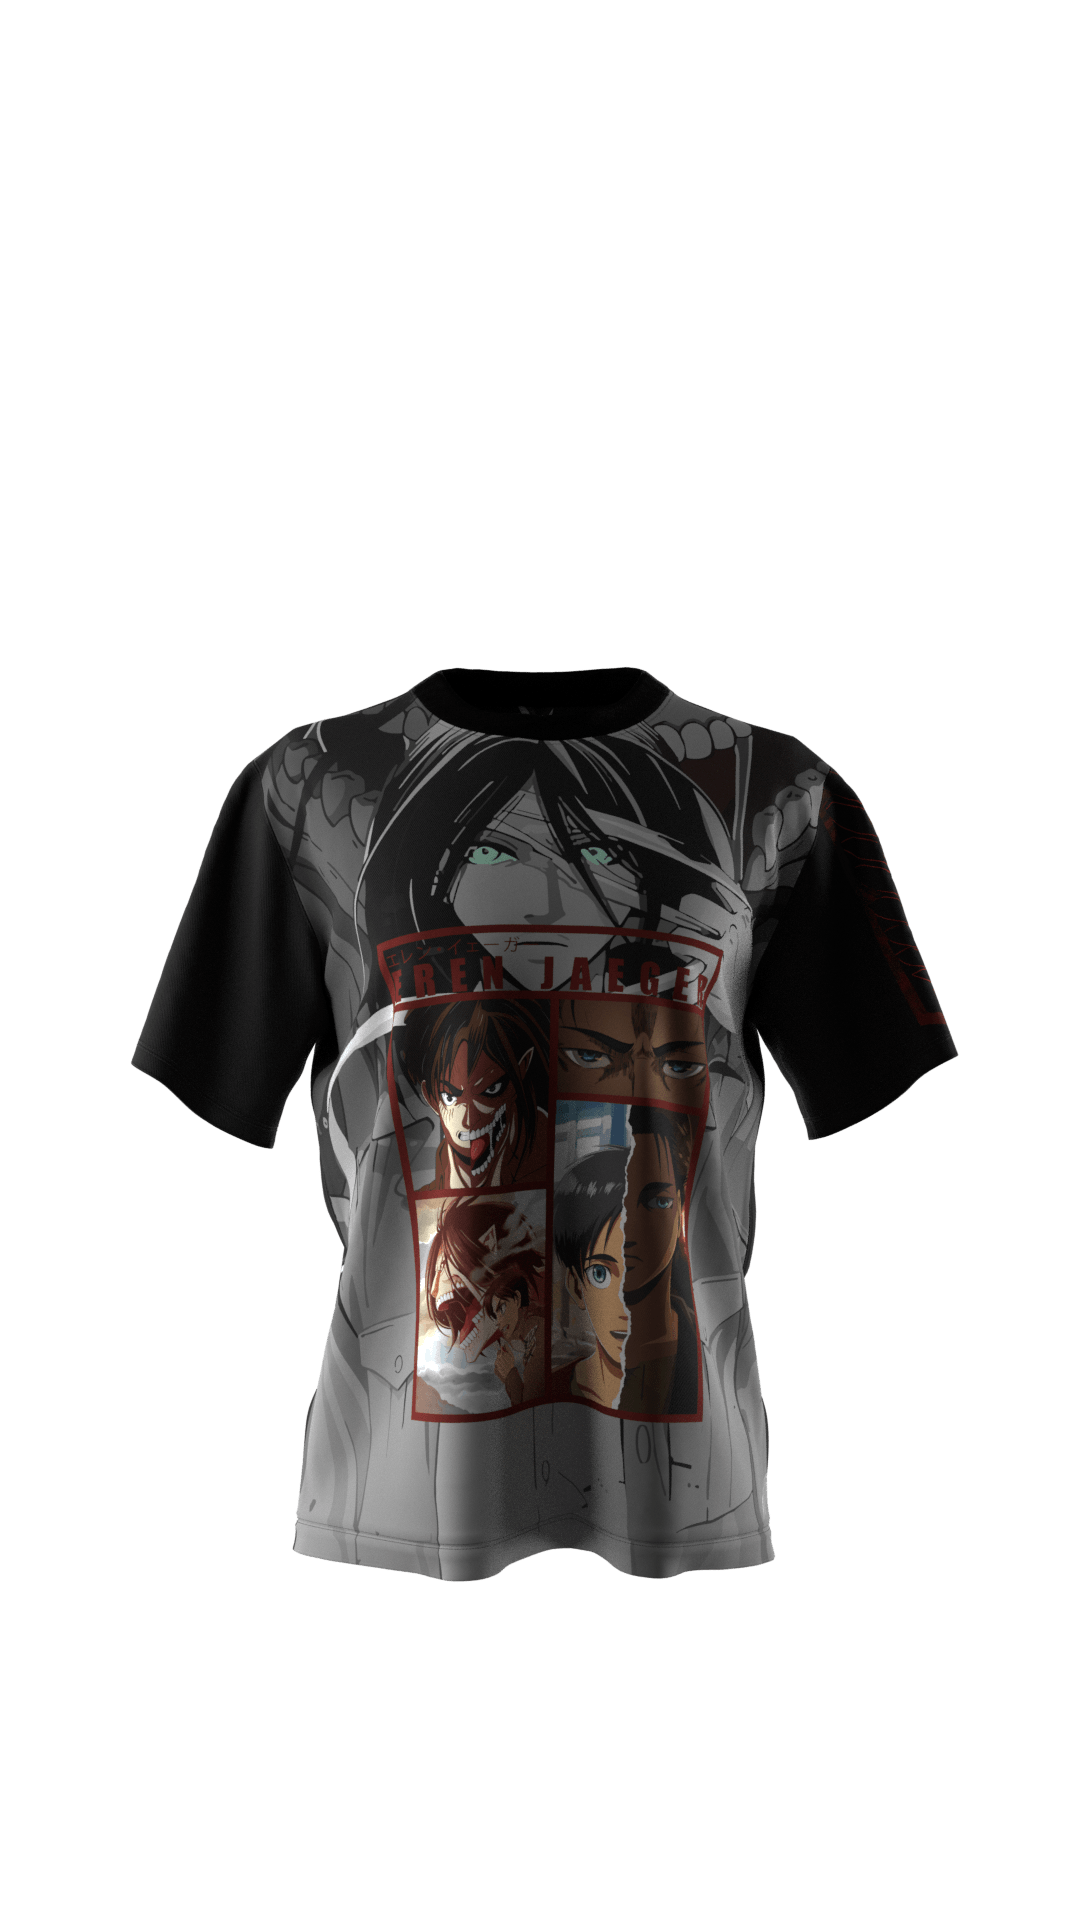 Otaku Hub Store S All Over T-Shirt Unisex T-shirt Eren Jaeger Special Edition Anime, Abbigliamento anime, anime store, accessori anime, manga, manga store, abbigliamento manga accessori manga